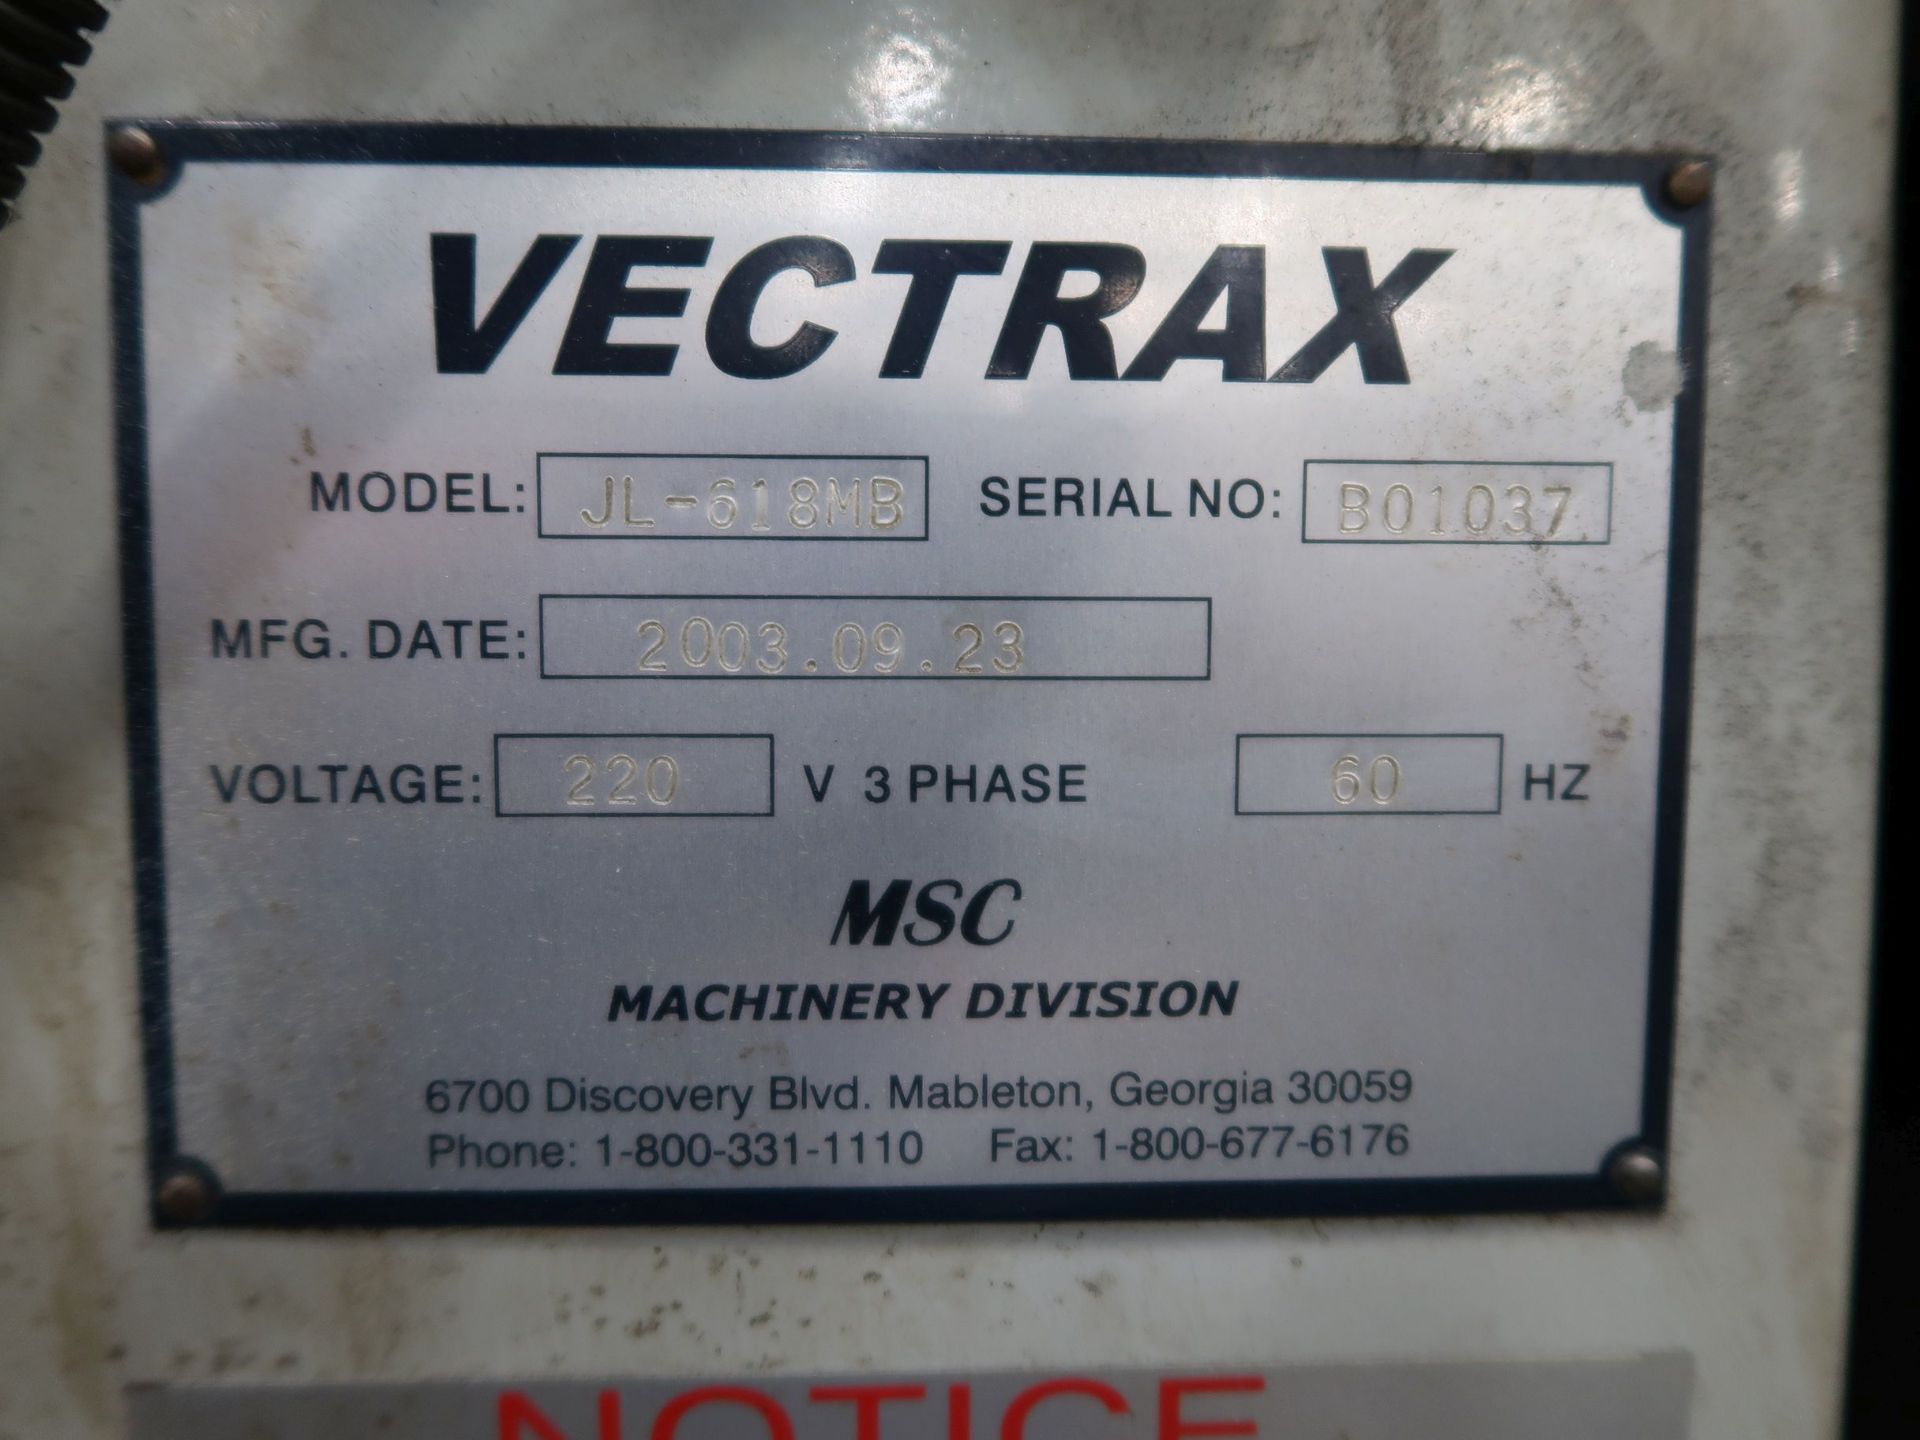 6" X 18" VECTRAX MODEL JL-618MB SURFACE GRINDER; S/N B01037 (2003) - Bild 6 aus 6